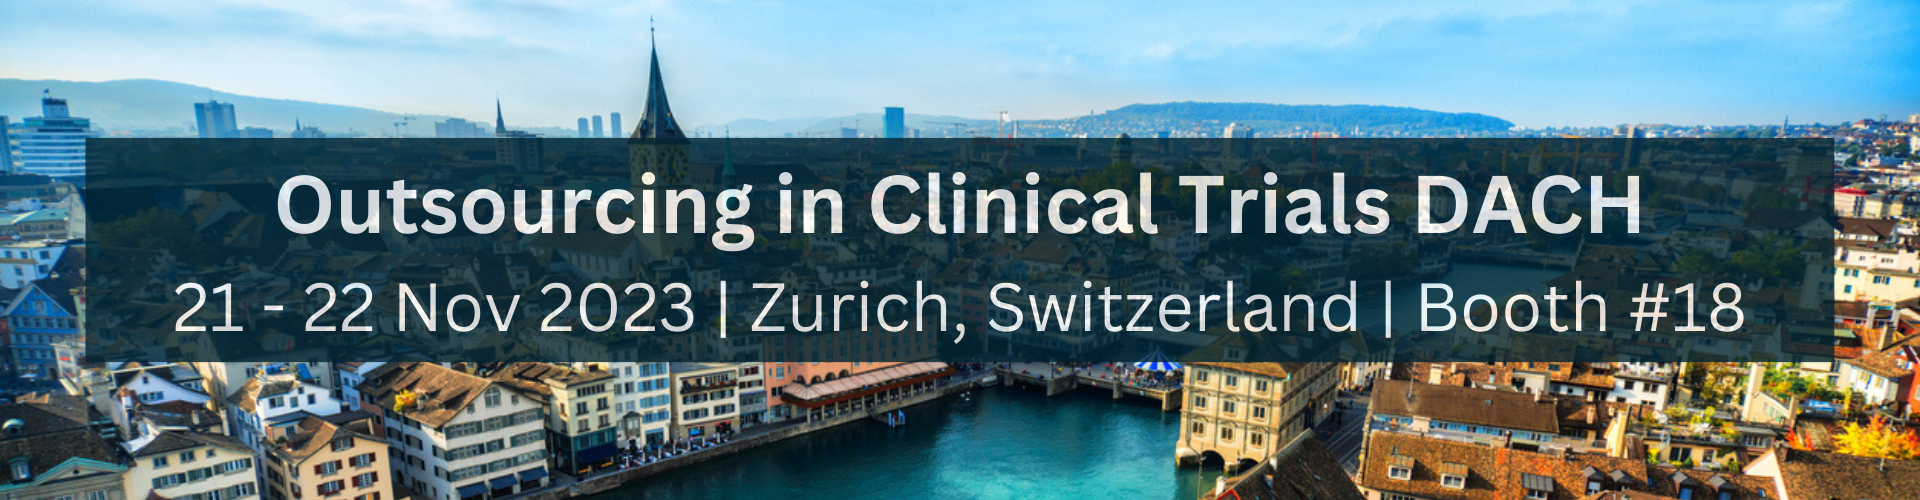 Outsourcing in Clinical Trials DACH 21 - 22 Nov 2023  Zurich, Switzerland  Booth #18 (1)